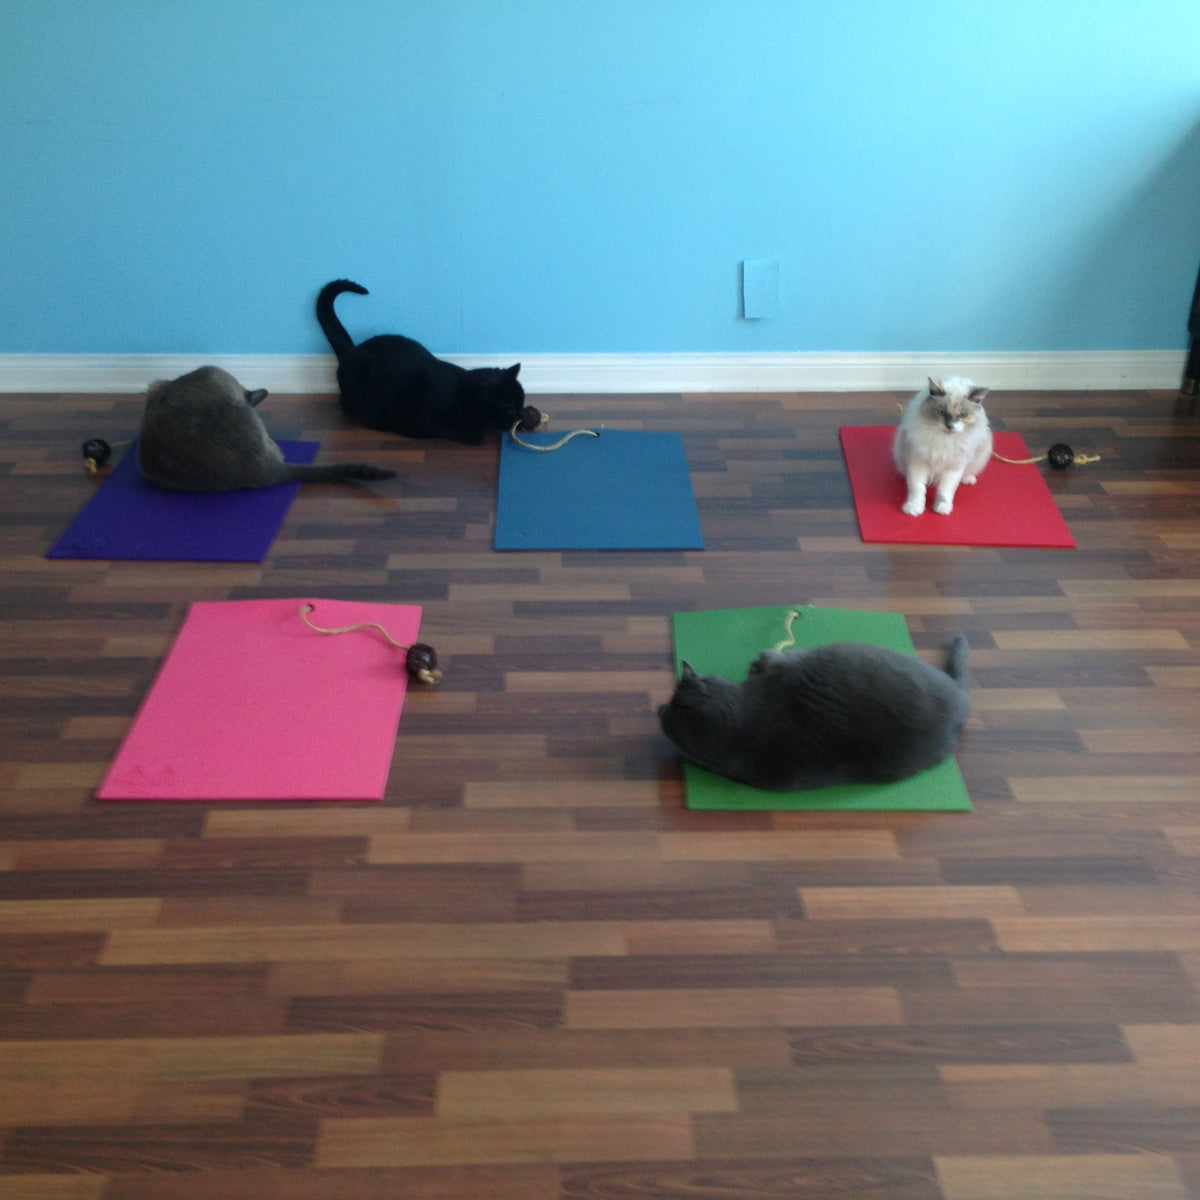 Feline Yogi's Yoga Cat Mat - Modern Cat